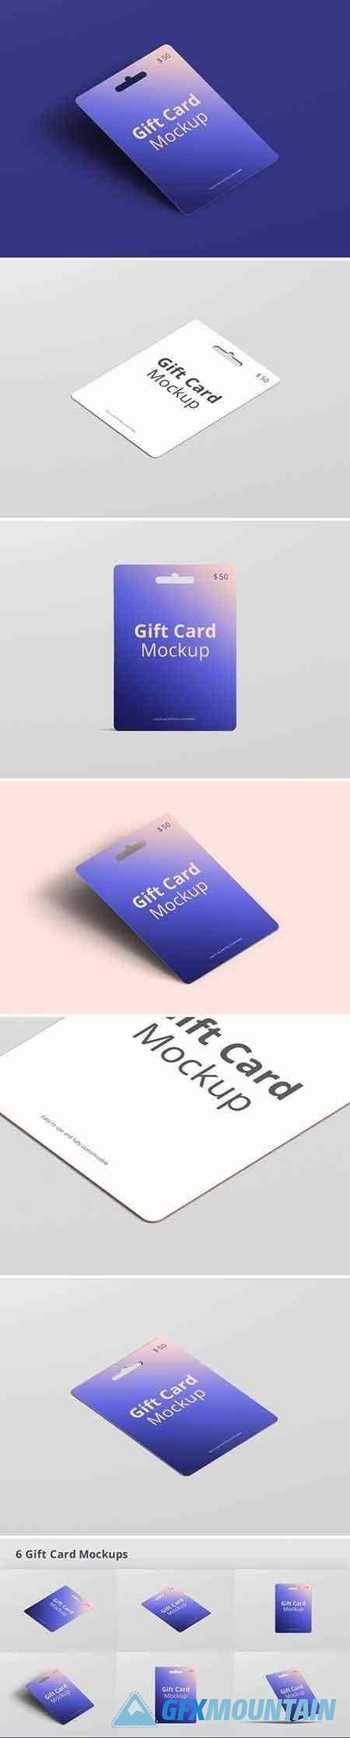 Download Gift Card Mockup 2 Free Download Graphics Fonts Vectors Print Templates Gfxmountain Com